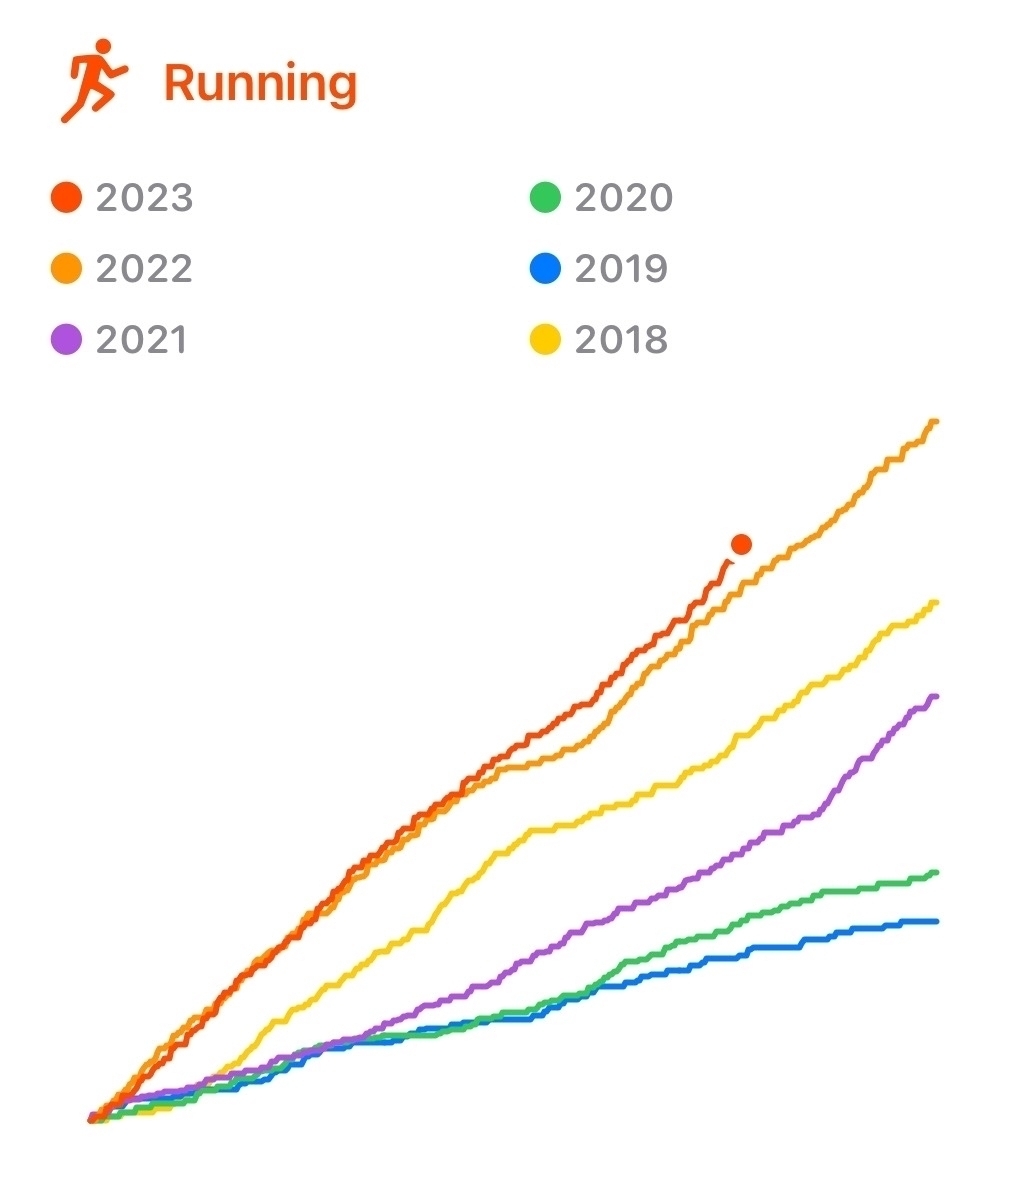 Graph of cumulative running for each year